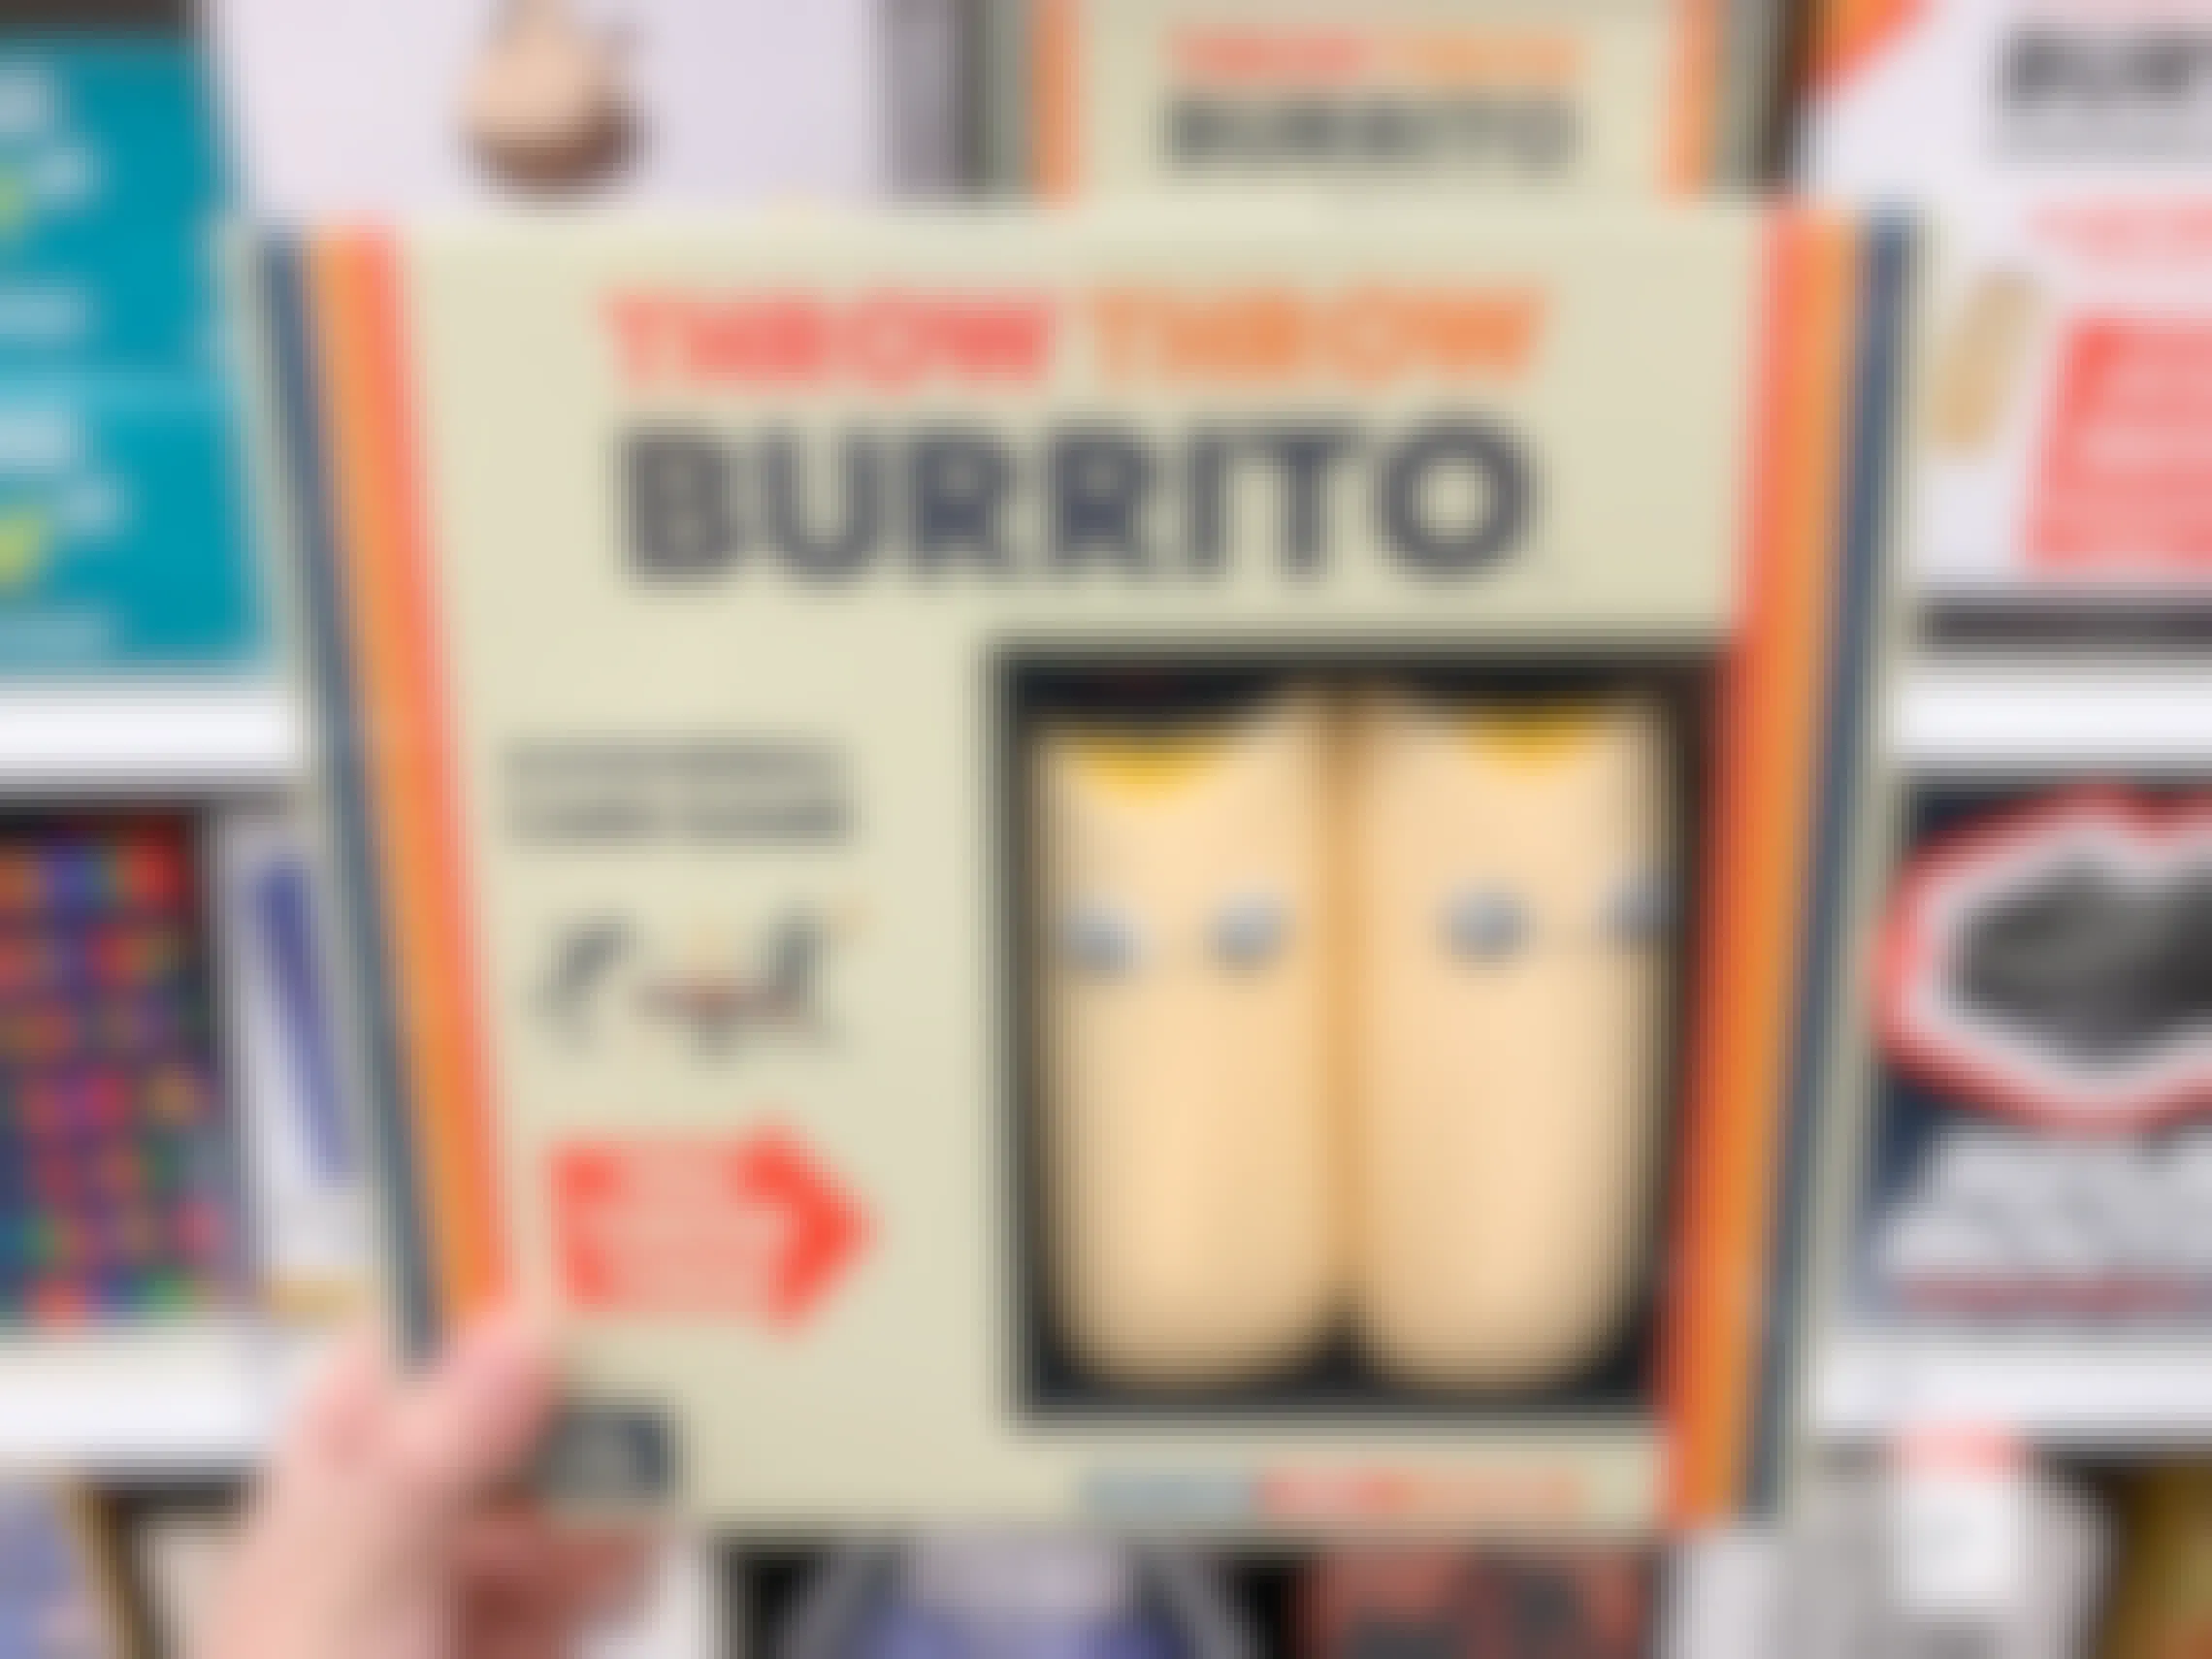 Throw Throw Burrito board game at Target